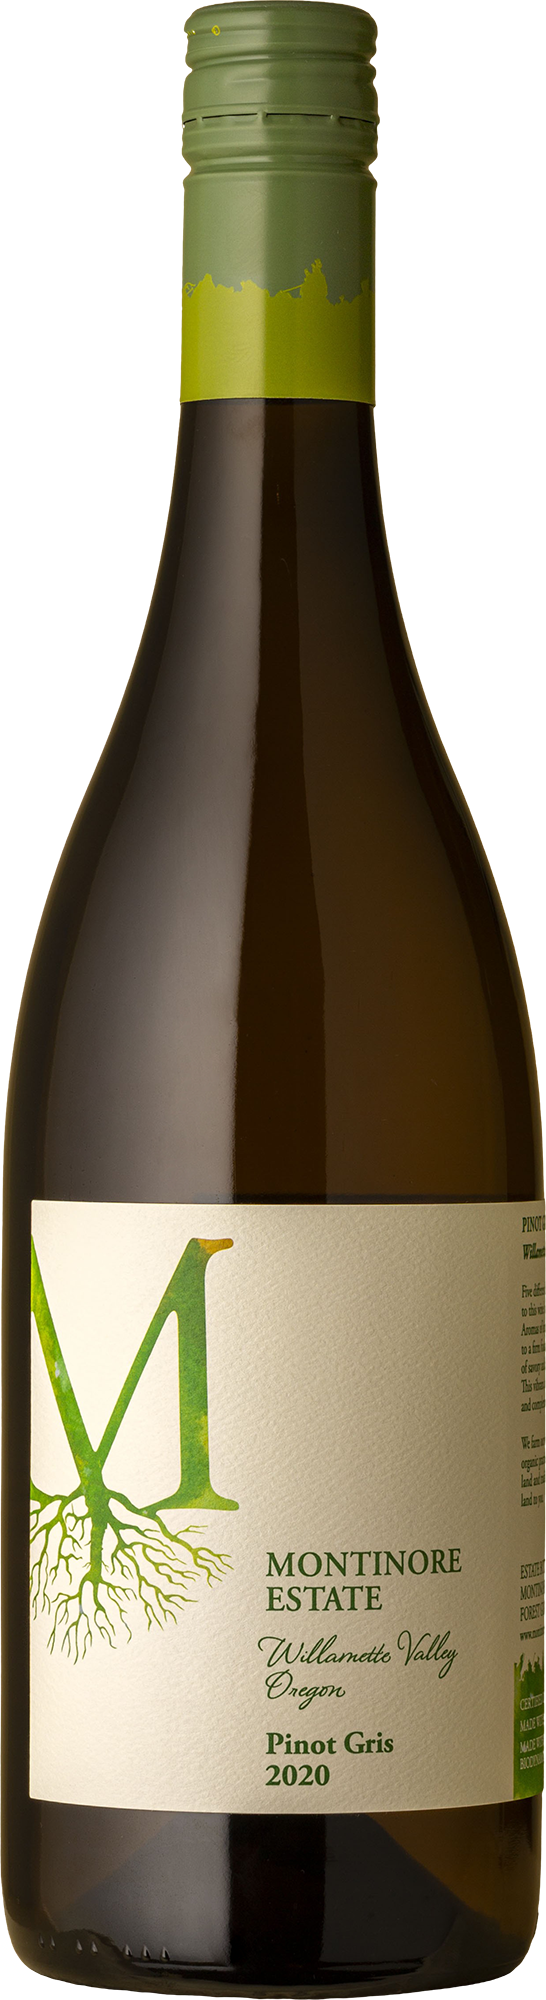 Montinore Estate - Pinot Gris 2020 White Wine